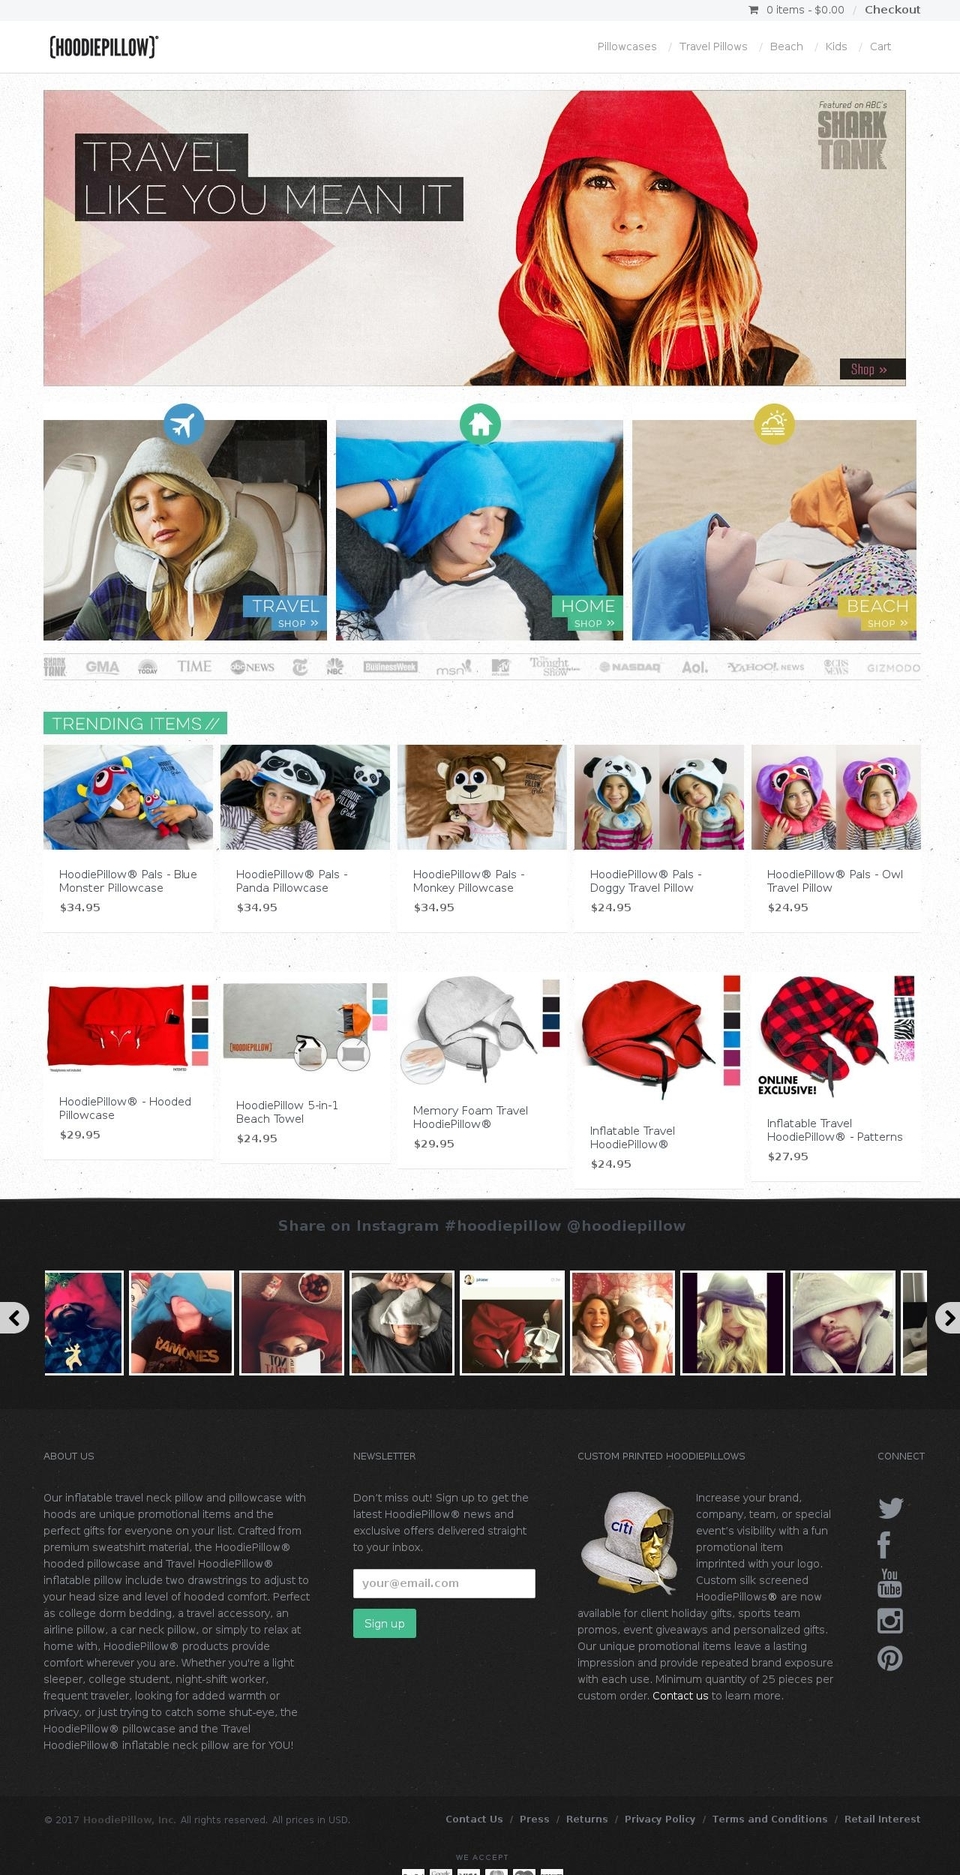 pillowhoodie.mobi shopify website screenshot